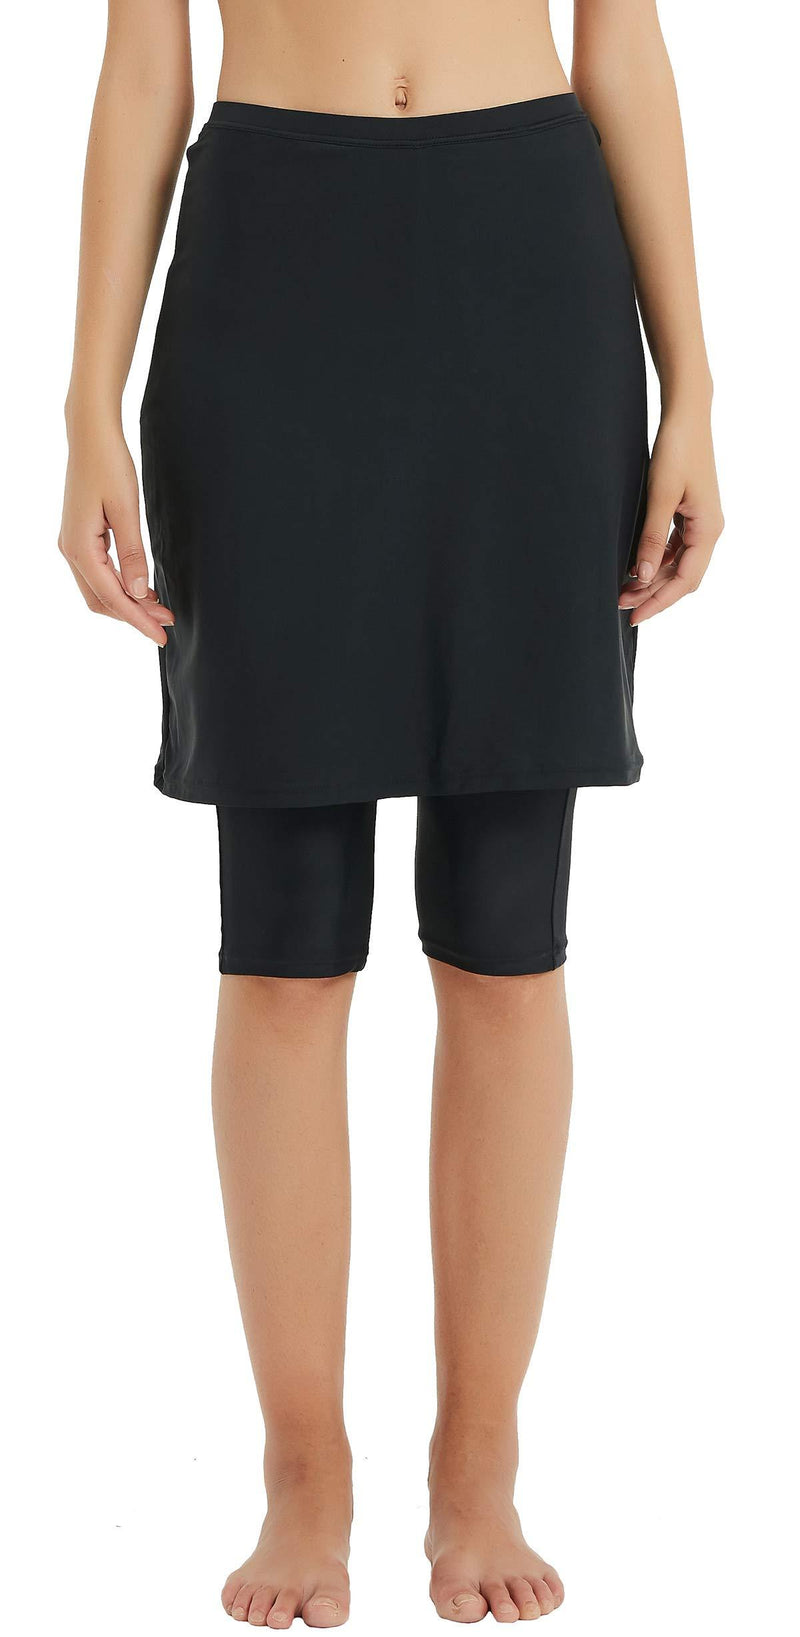 [AUSTRALIA] - Aunua Women UPF 50+ Swimming Skirt with Legging UV Sun Protection Swim Skort Capris Shorts Black X-Large 